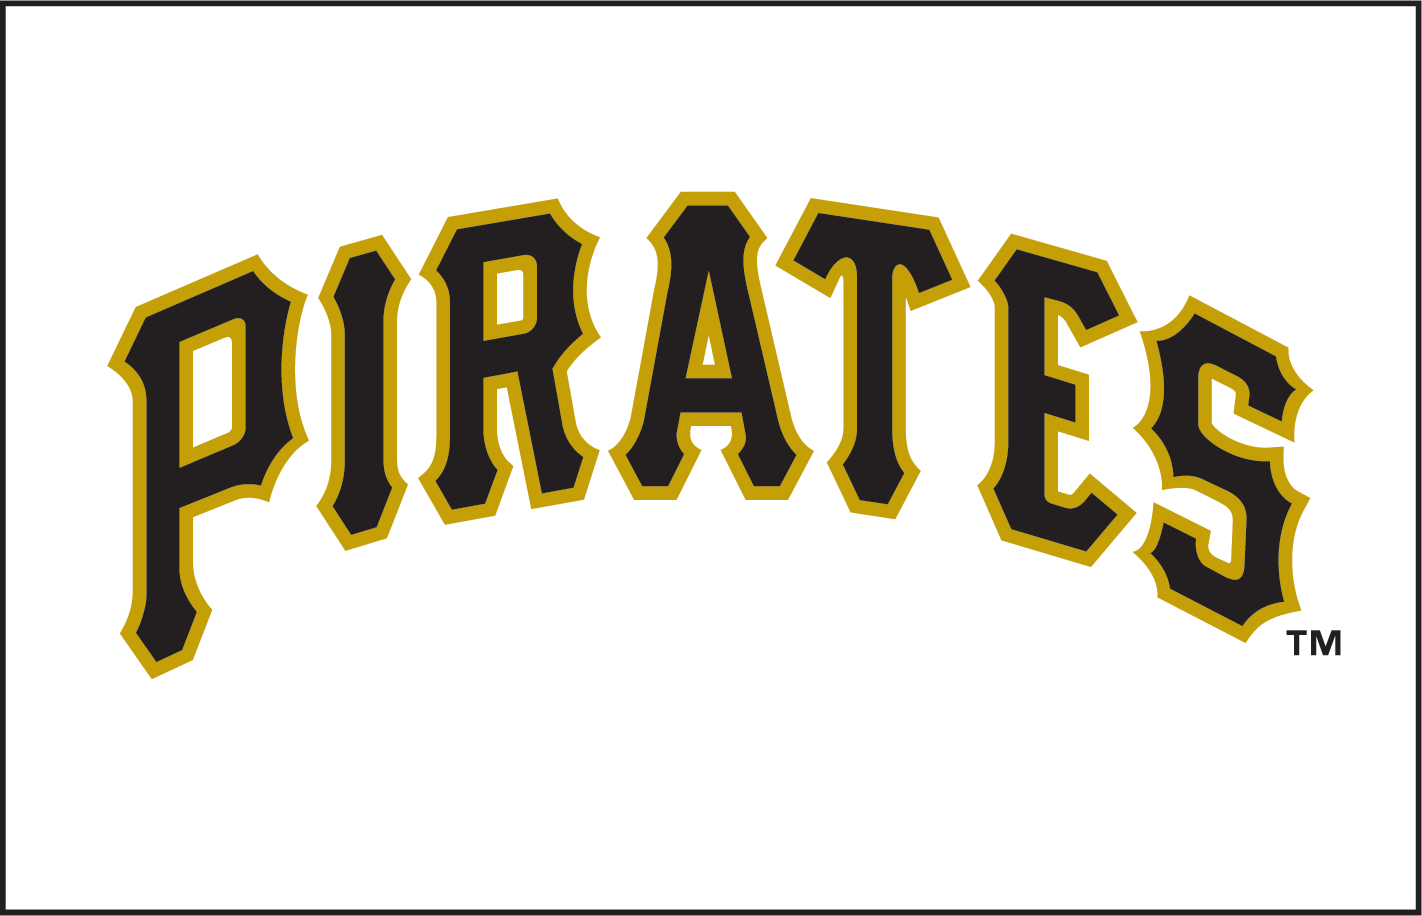 Pittsburgh Pirates PNG-PlusPN